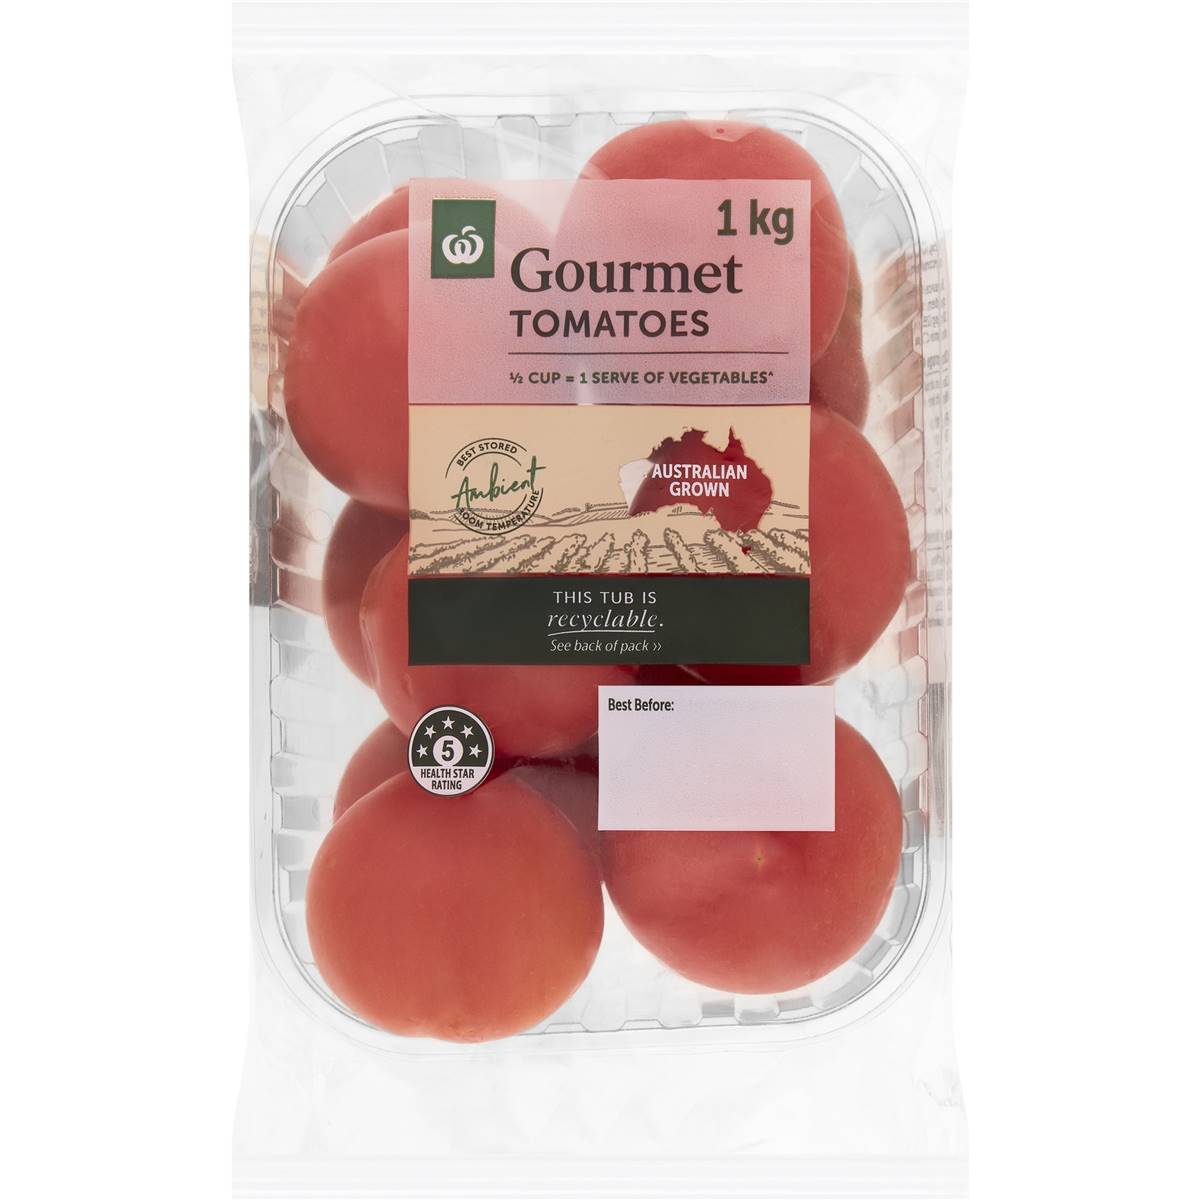 Calories in Woolworths Gourmet Tomatoes